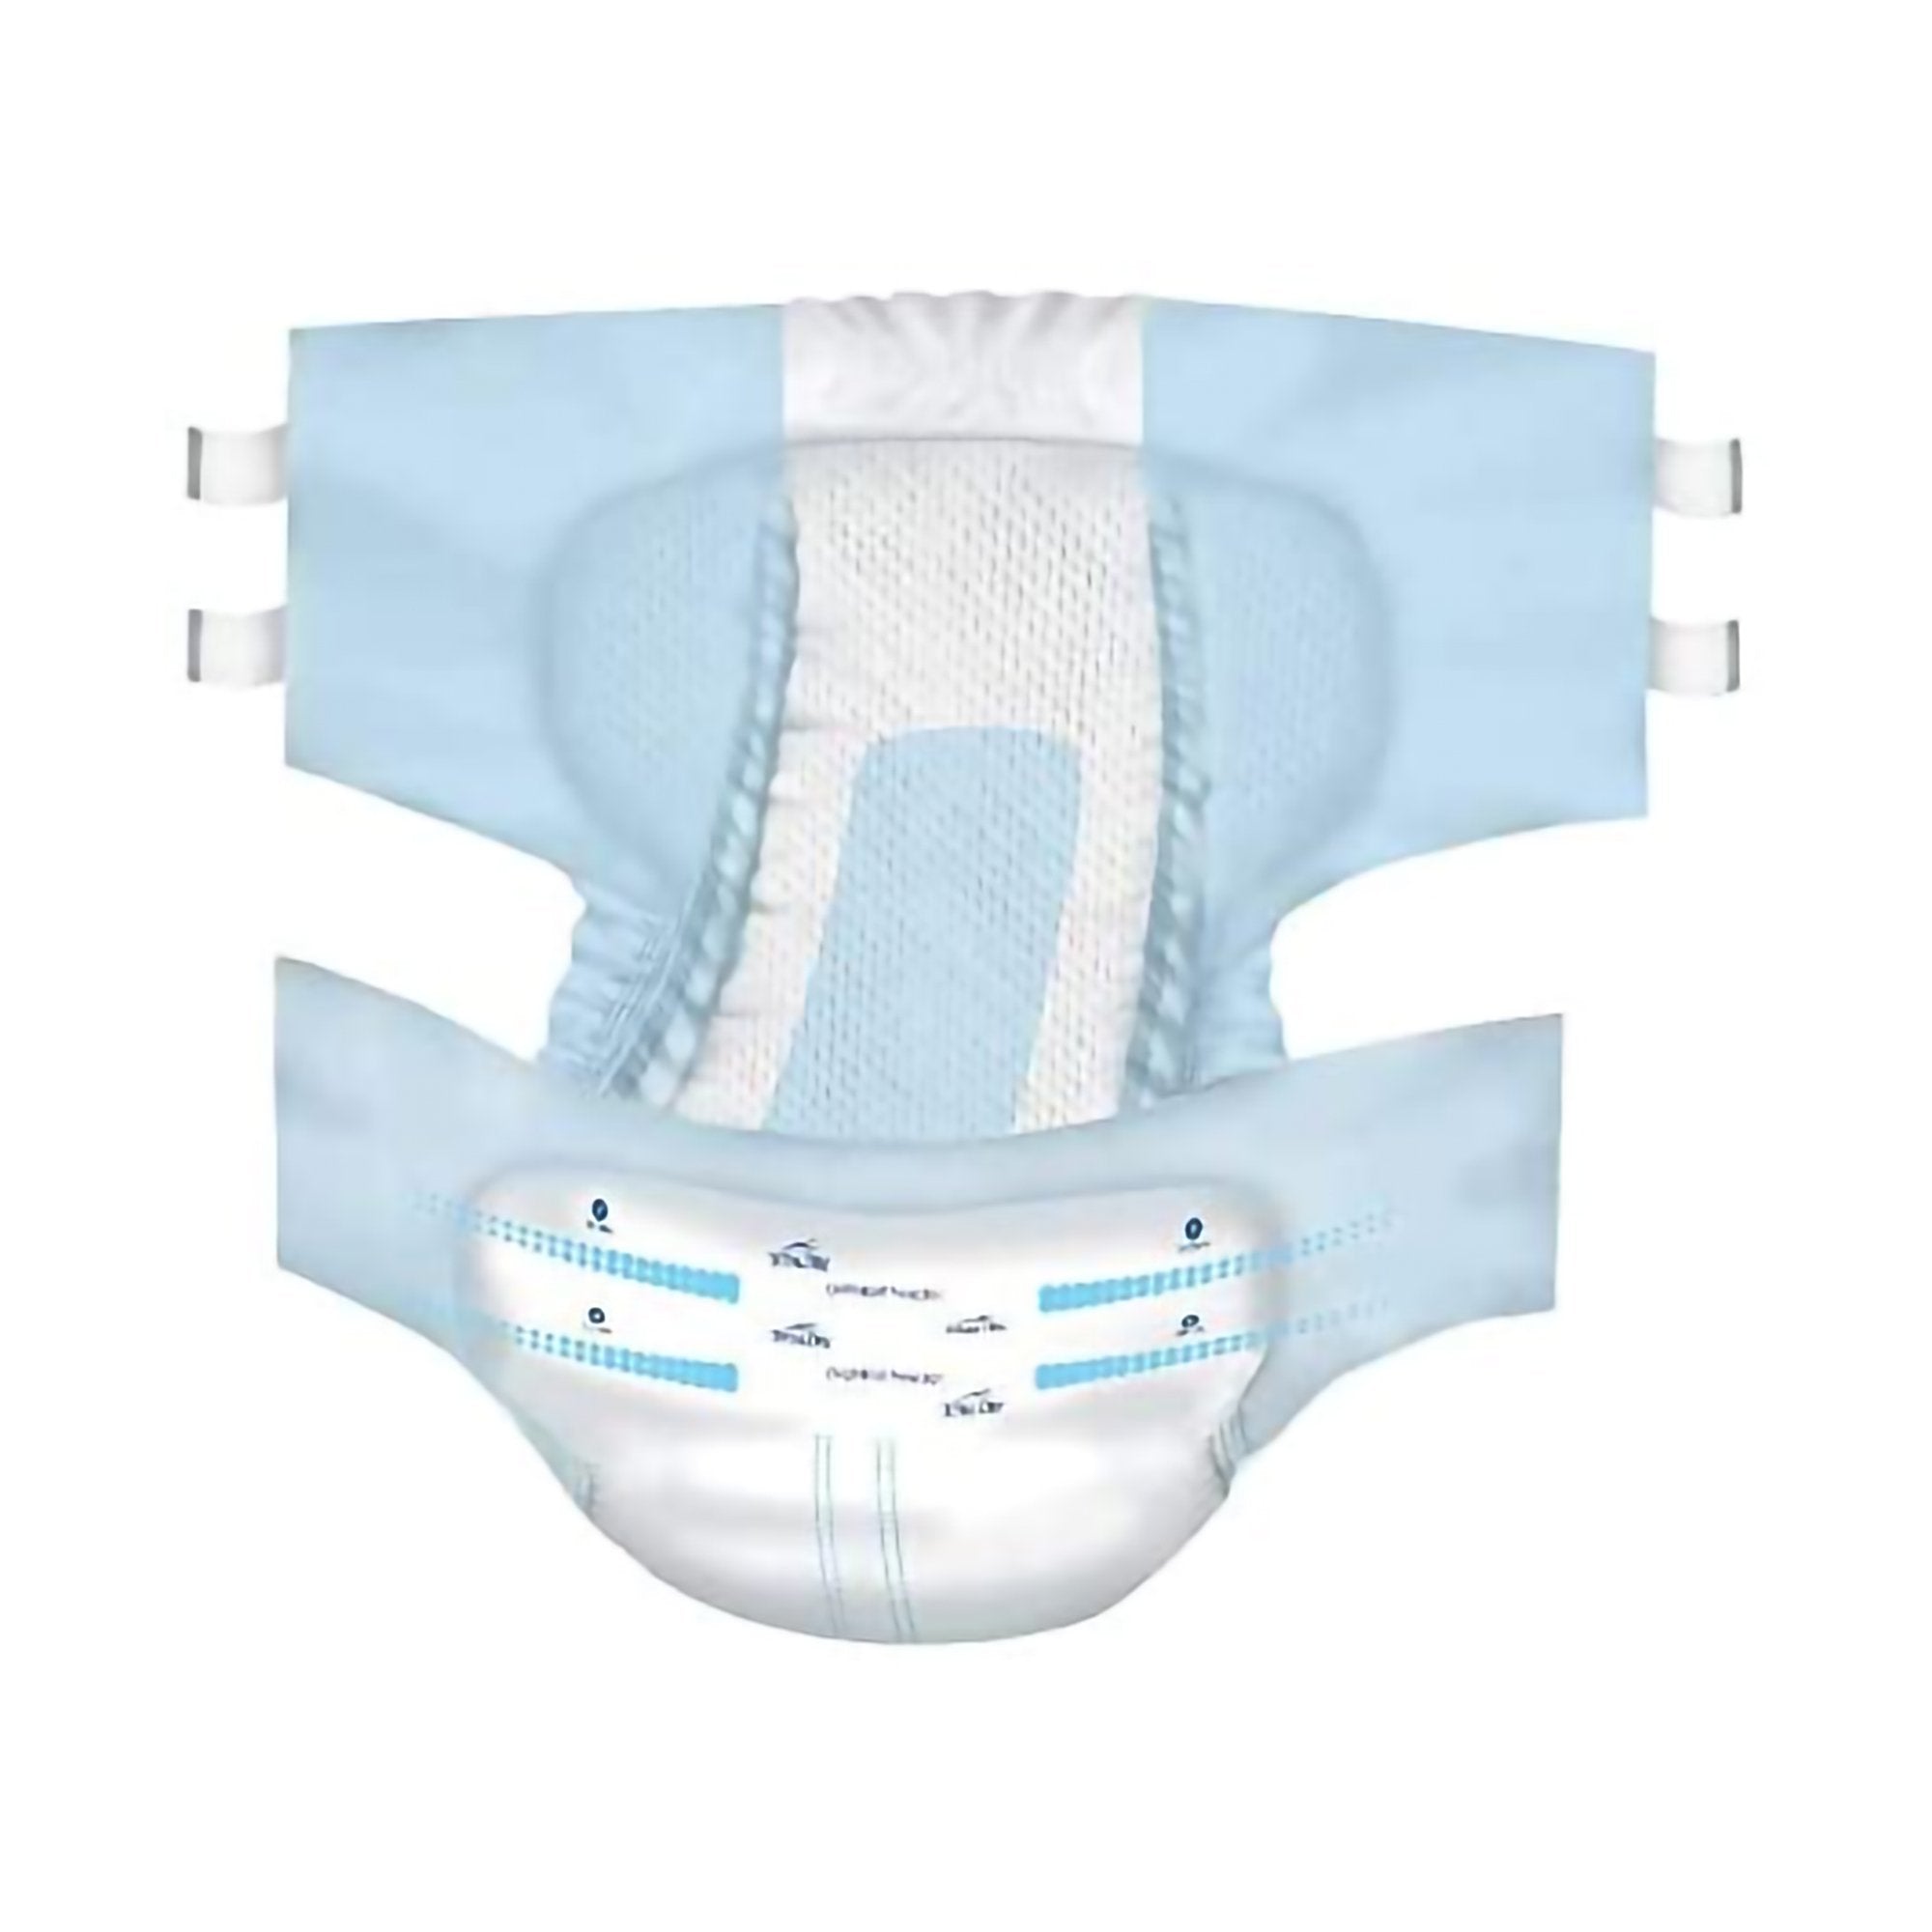 TotalDry Reusable Underwear (Unisex) - S, M, Large